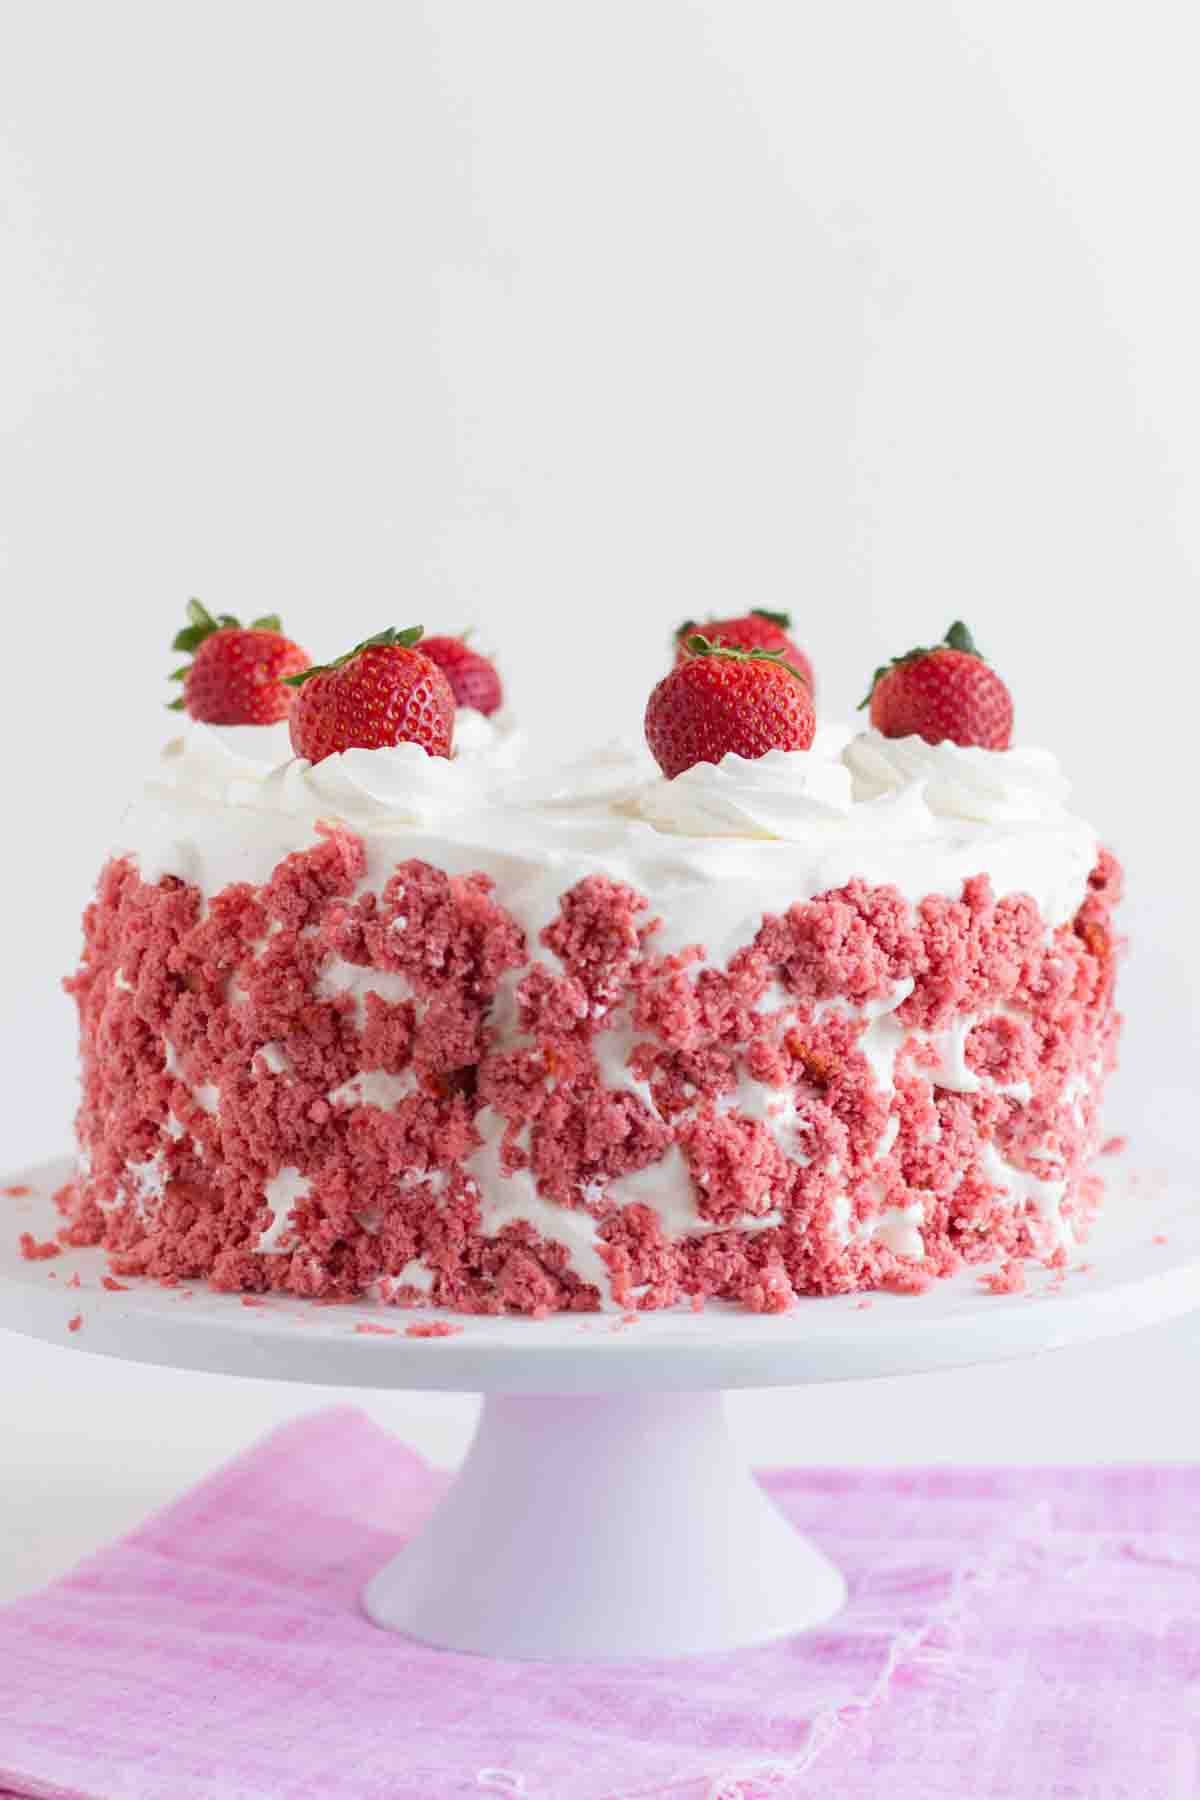 Full Strawberry Milkshake Ice Cream Cake on a cake stand topped with fresh strawberries.